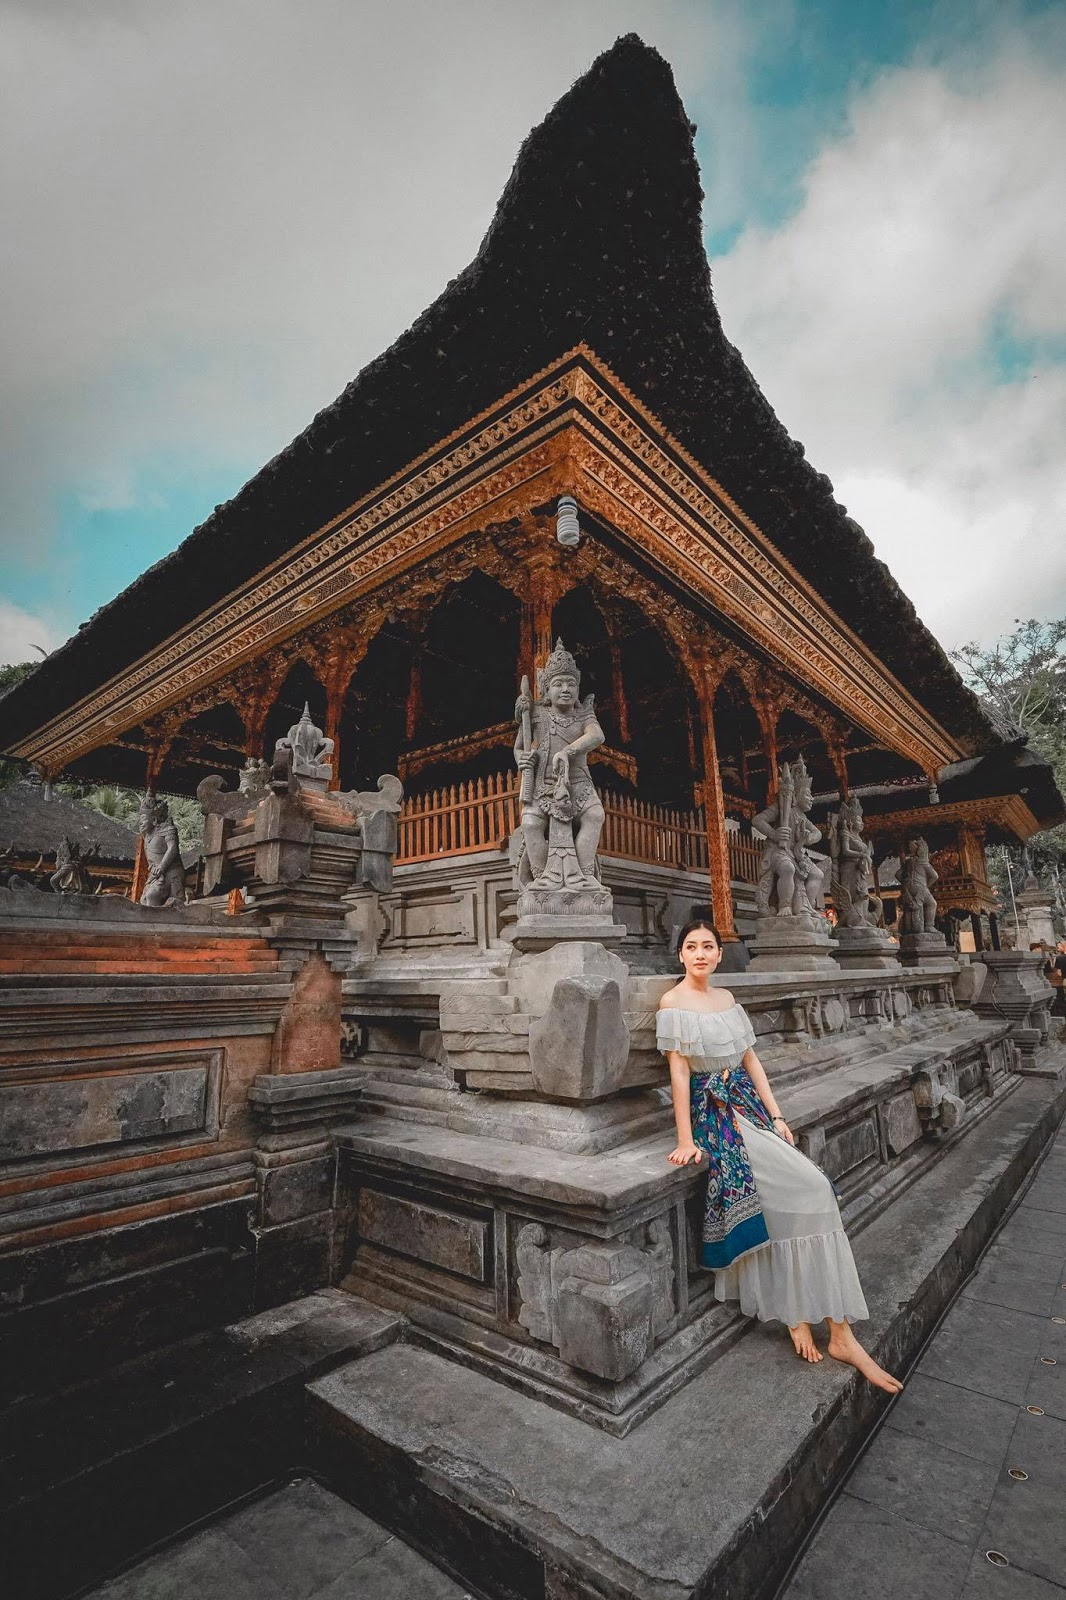 Yu Thandar Tin in Bali Beautiful Pictures